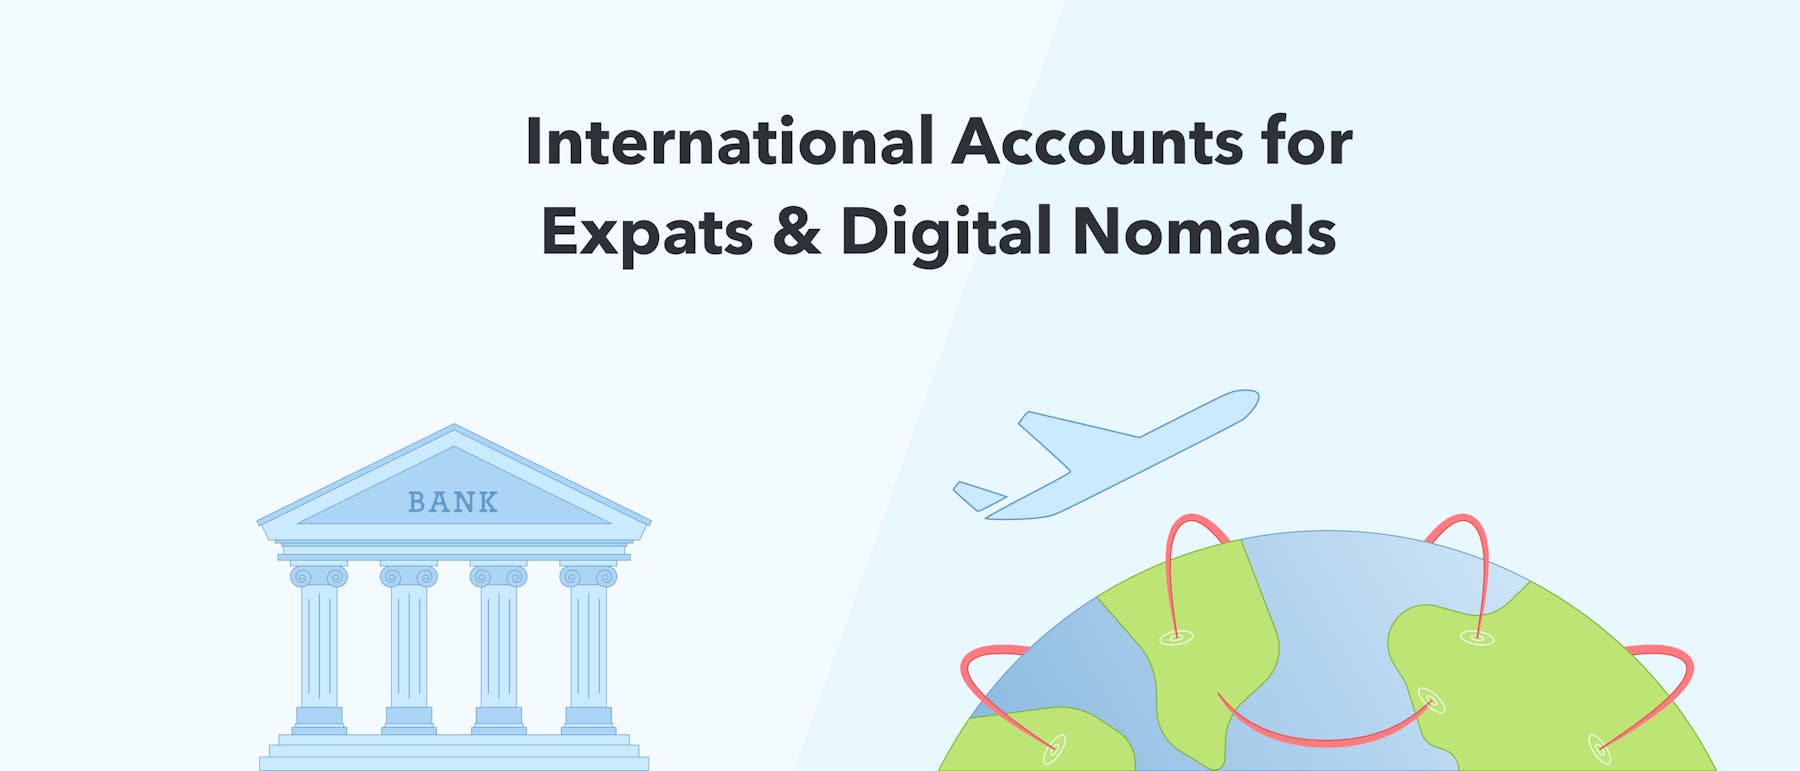 Best International Banks for Digital Nomads and Expats